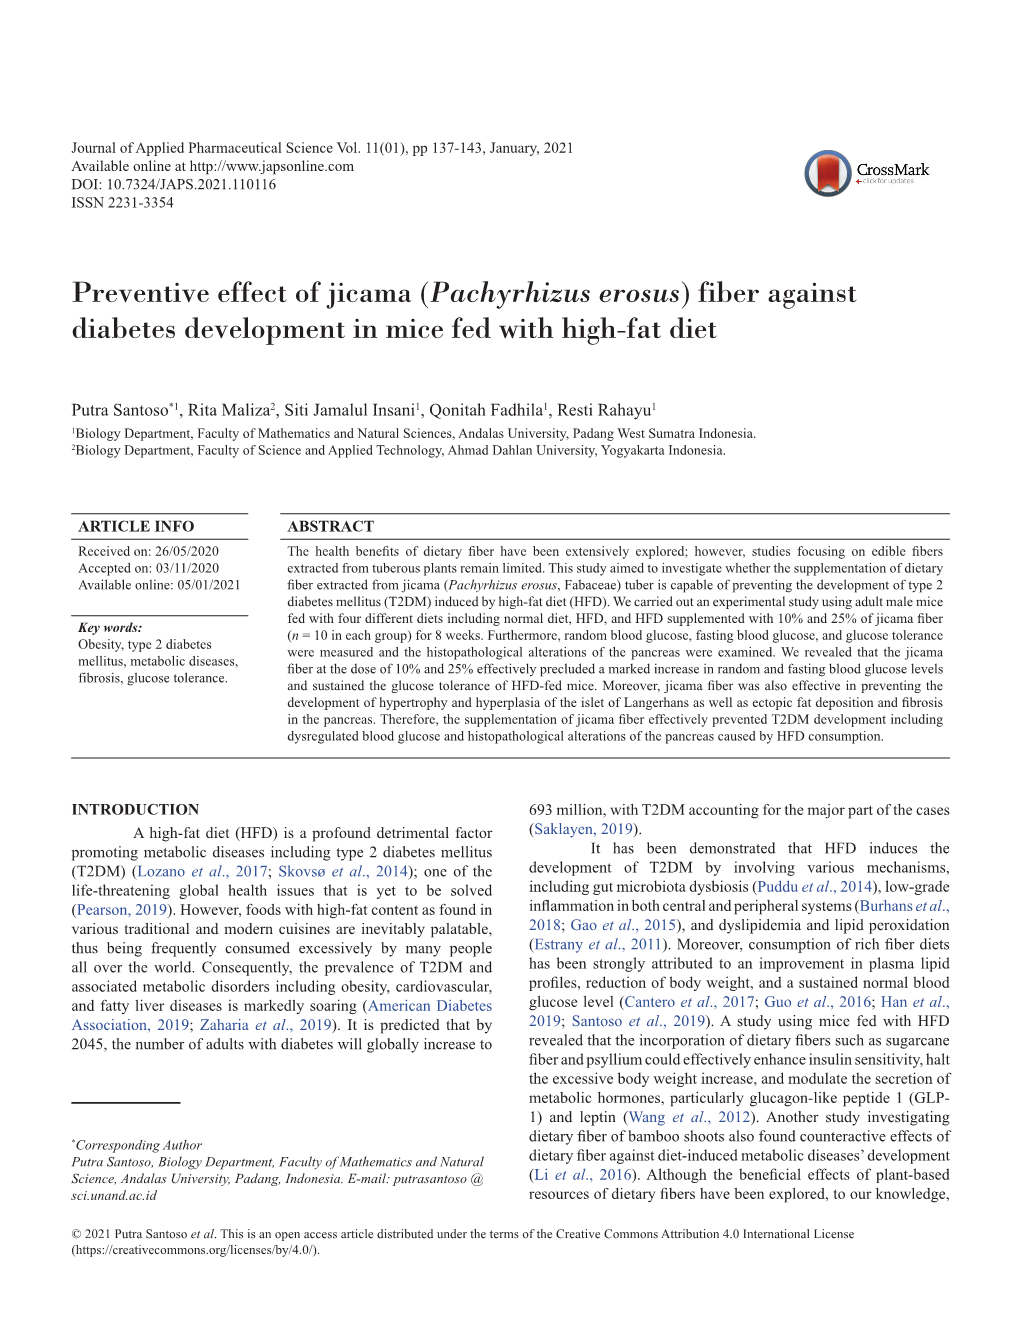 Pachyrhizus Erosus) Fiber Against Diabetes Development in Mice Fed with High-Fat Diet